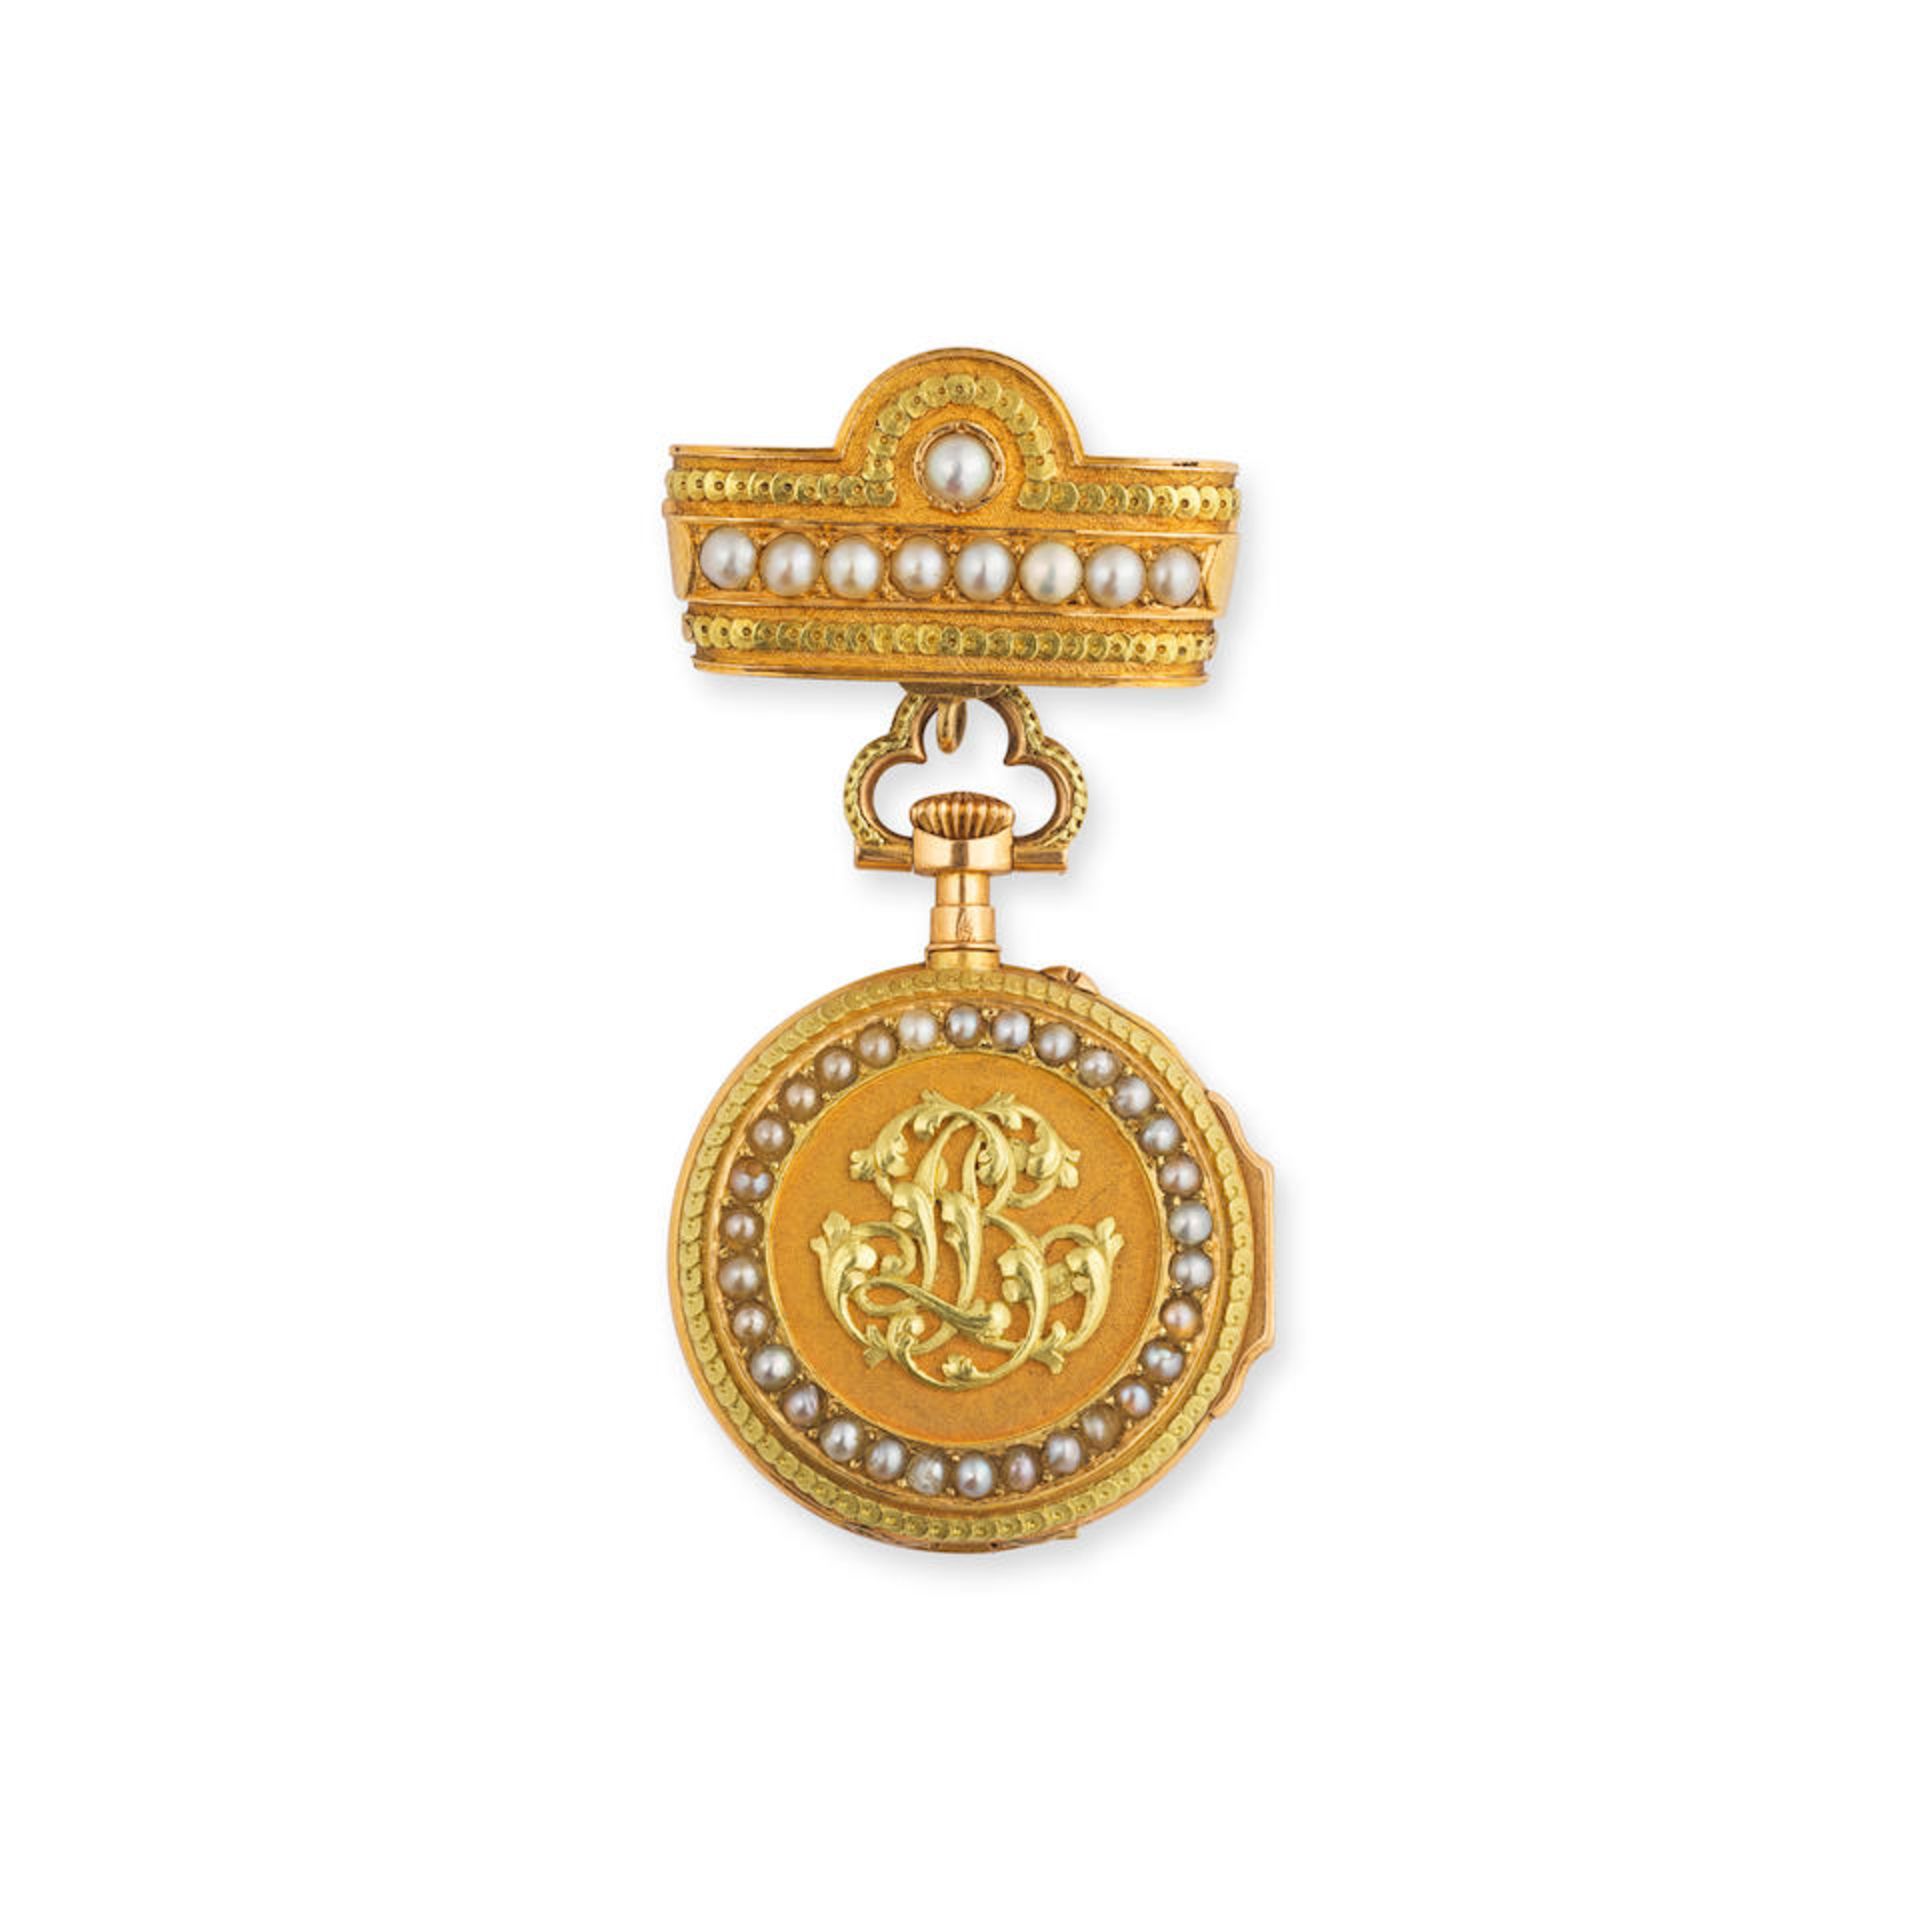 Leroy & Fils. An 18K gold open face keyless wind pocket watch with pearls Leroy & Fils. Montre d...